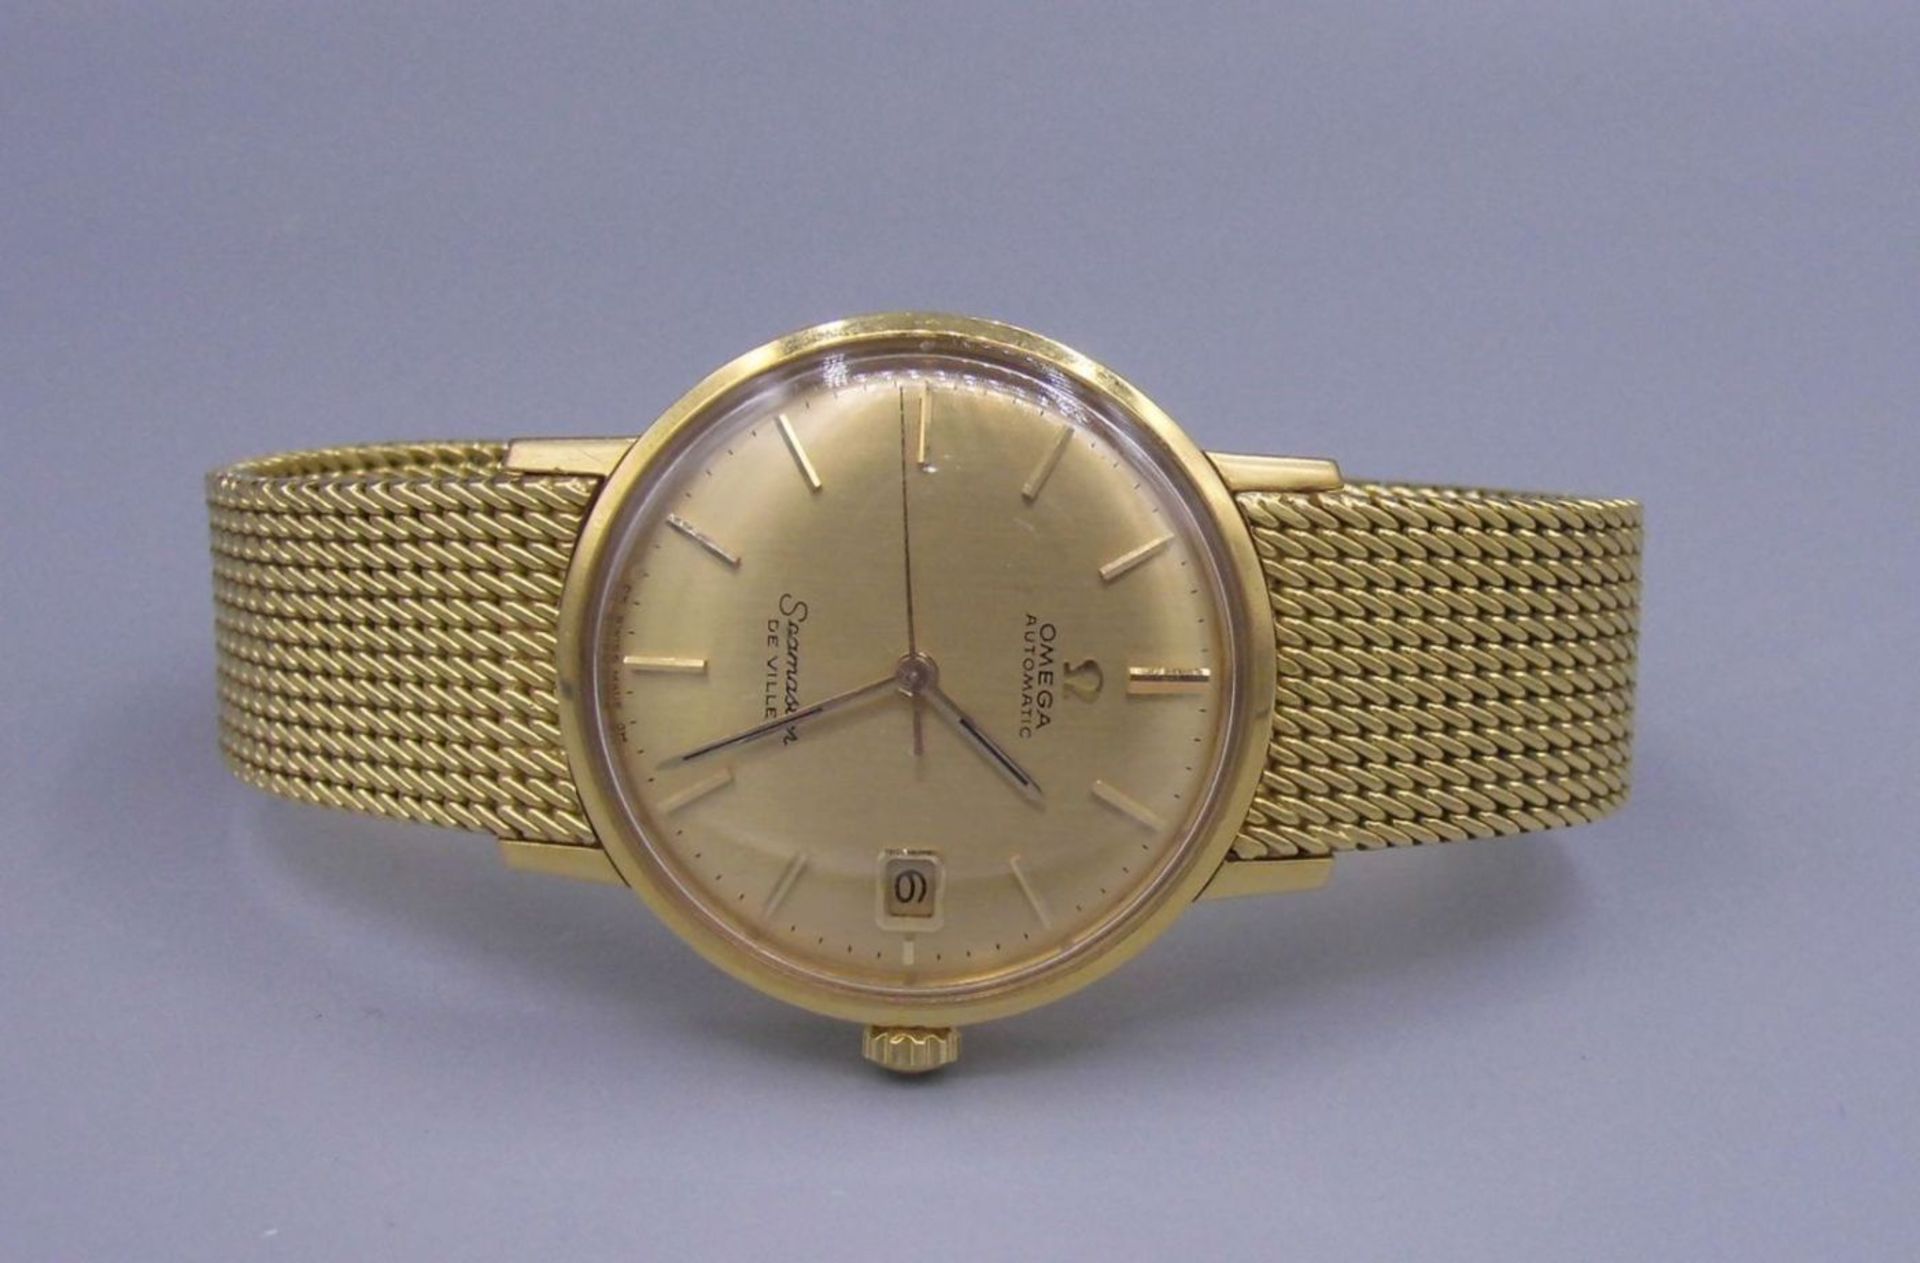 GOLDENE ARMBANDUHR / wristwatch, Automatik-Uhr, Manufaktur Omega, Modell "Seamaster De Ville".